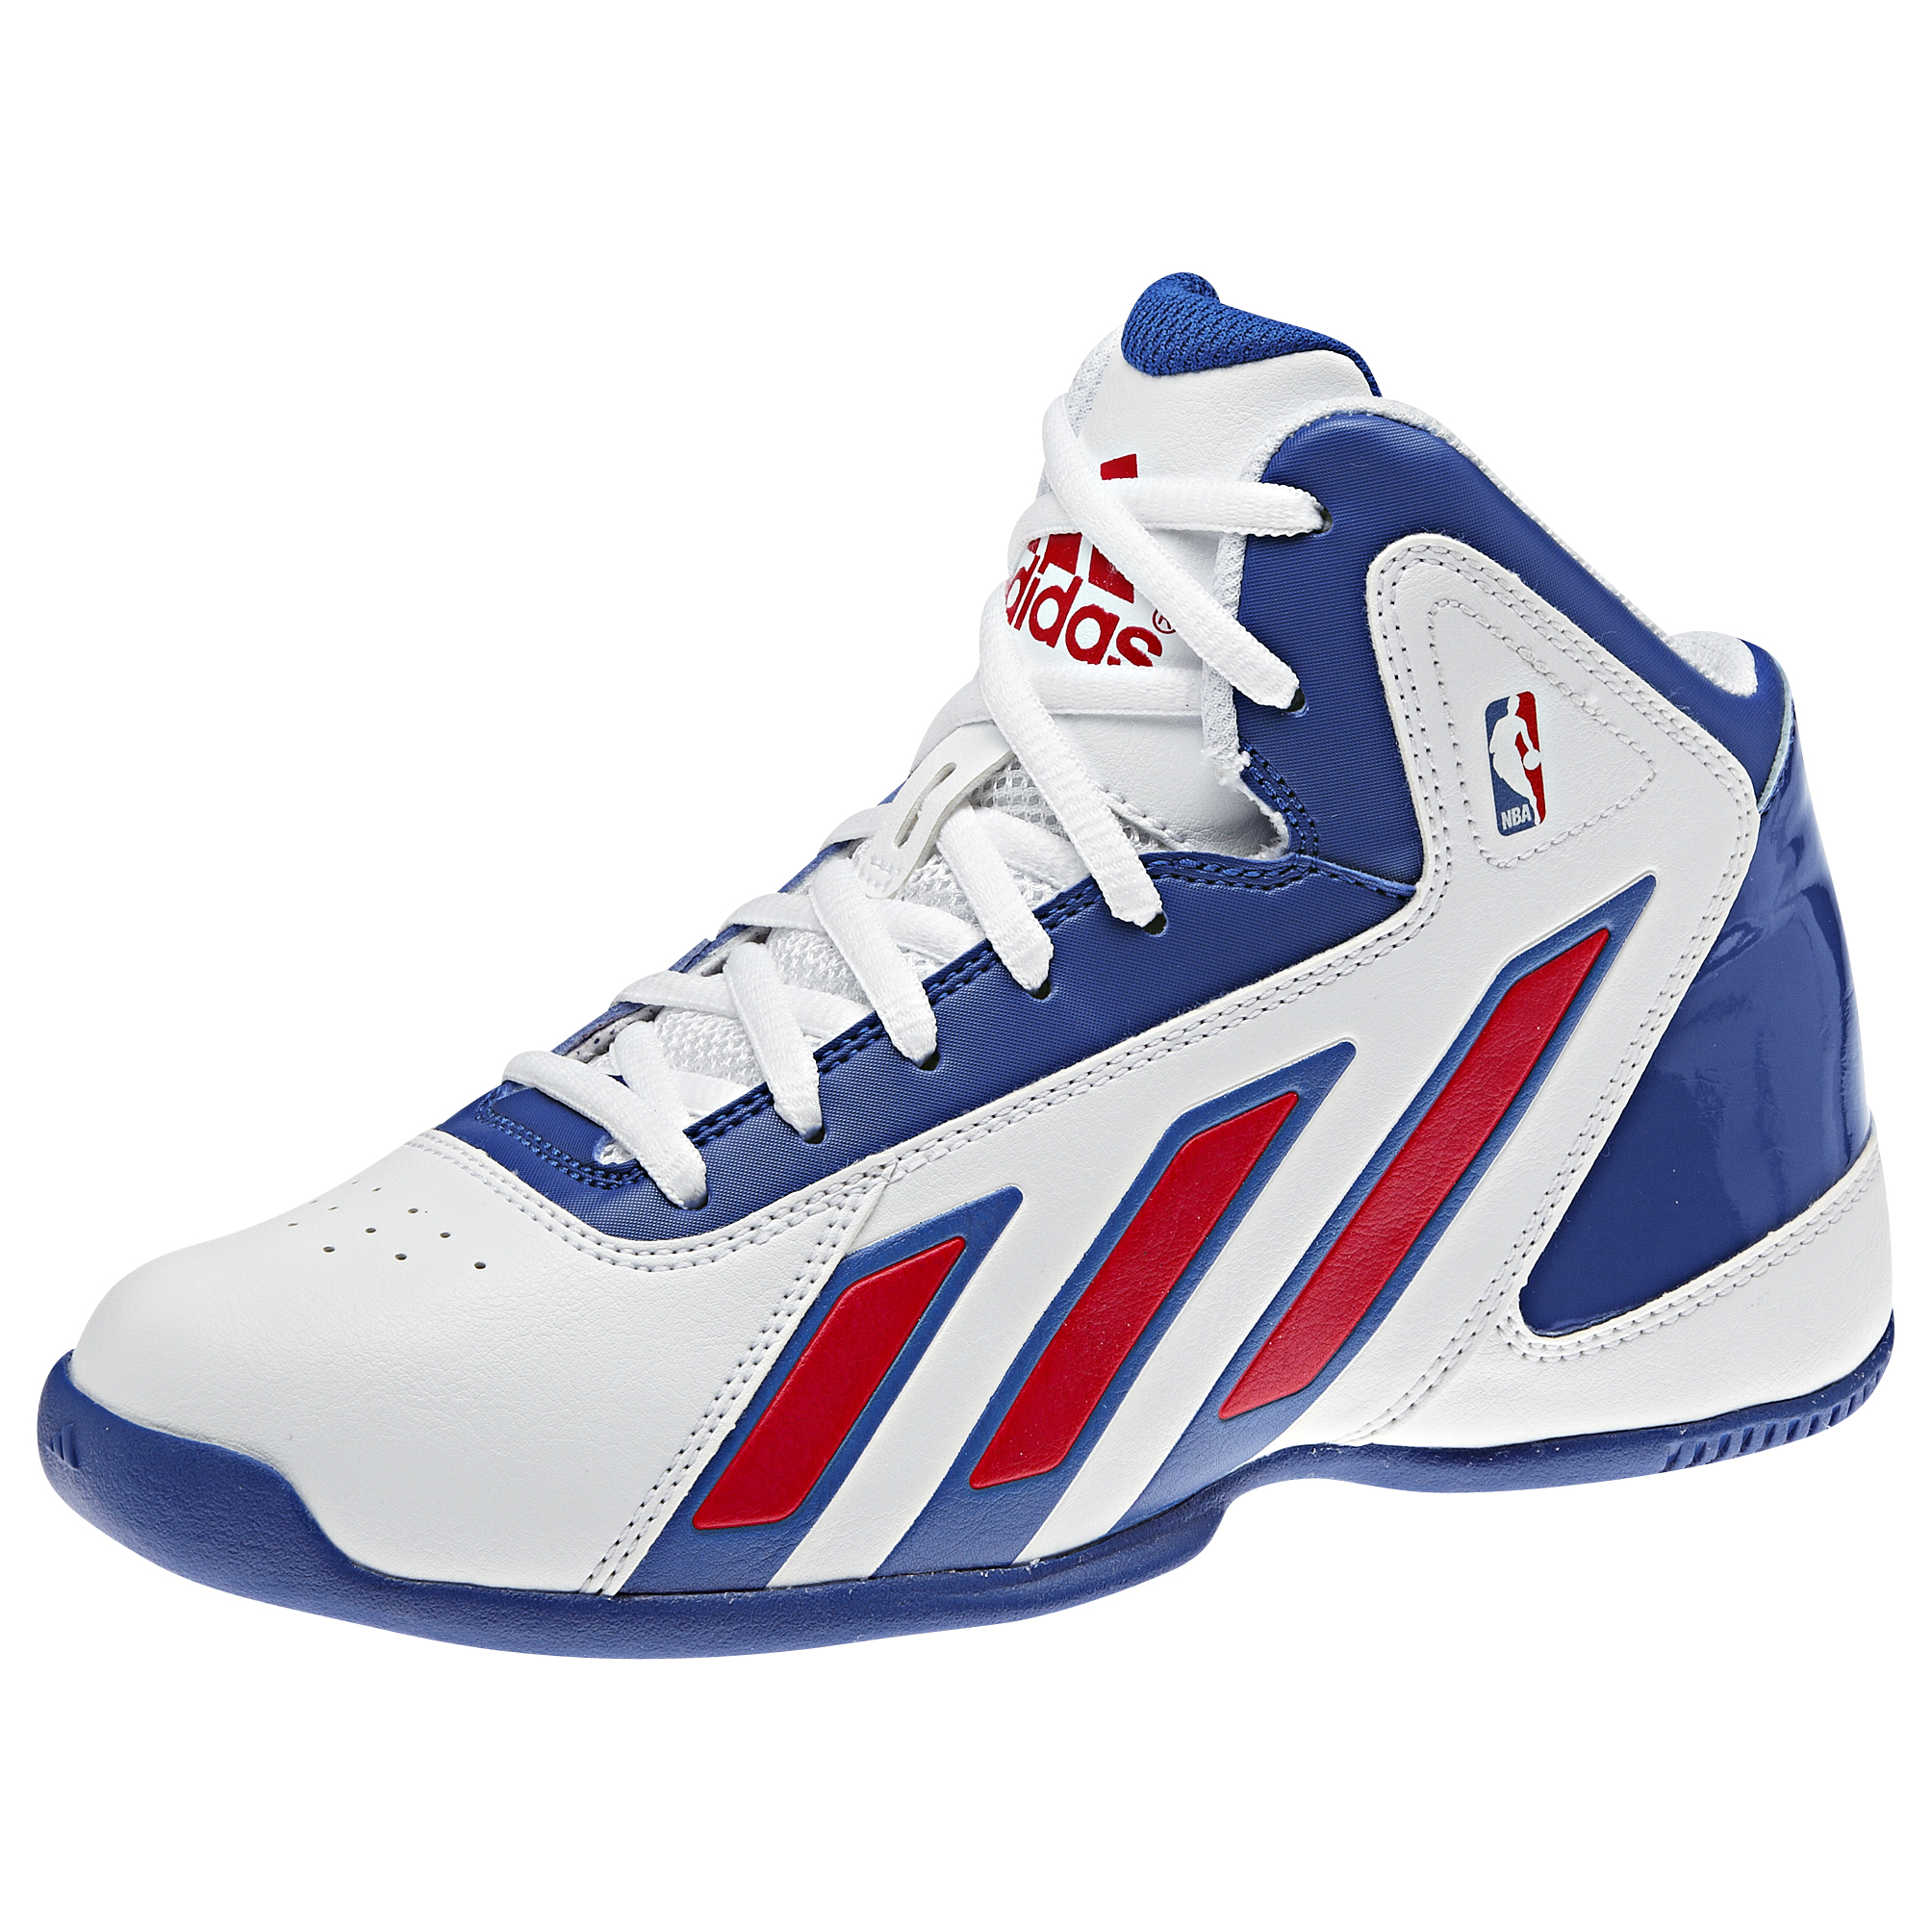 Adidas Nba Basketball Shoes